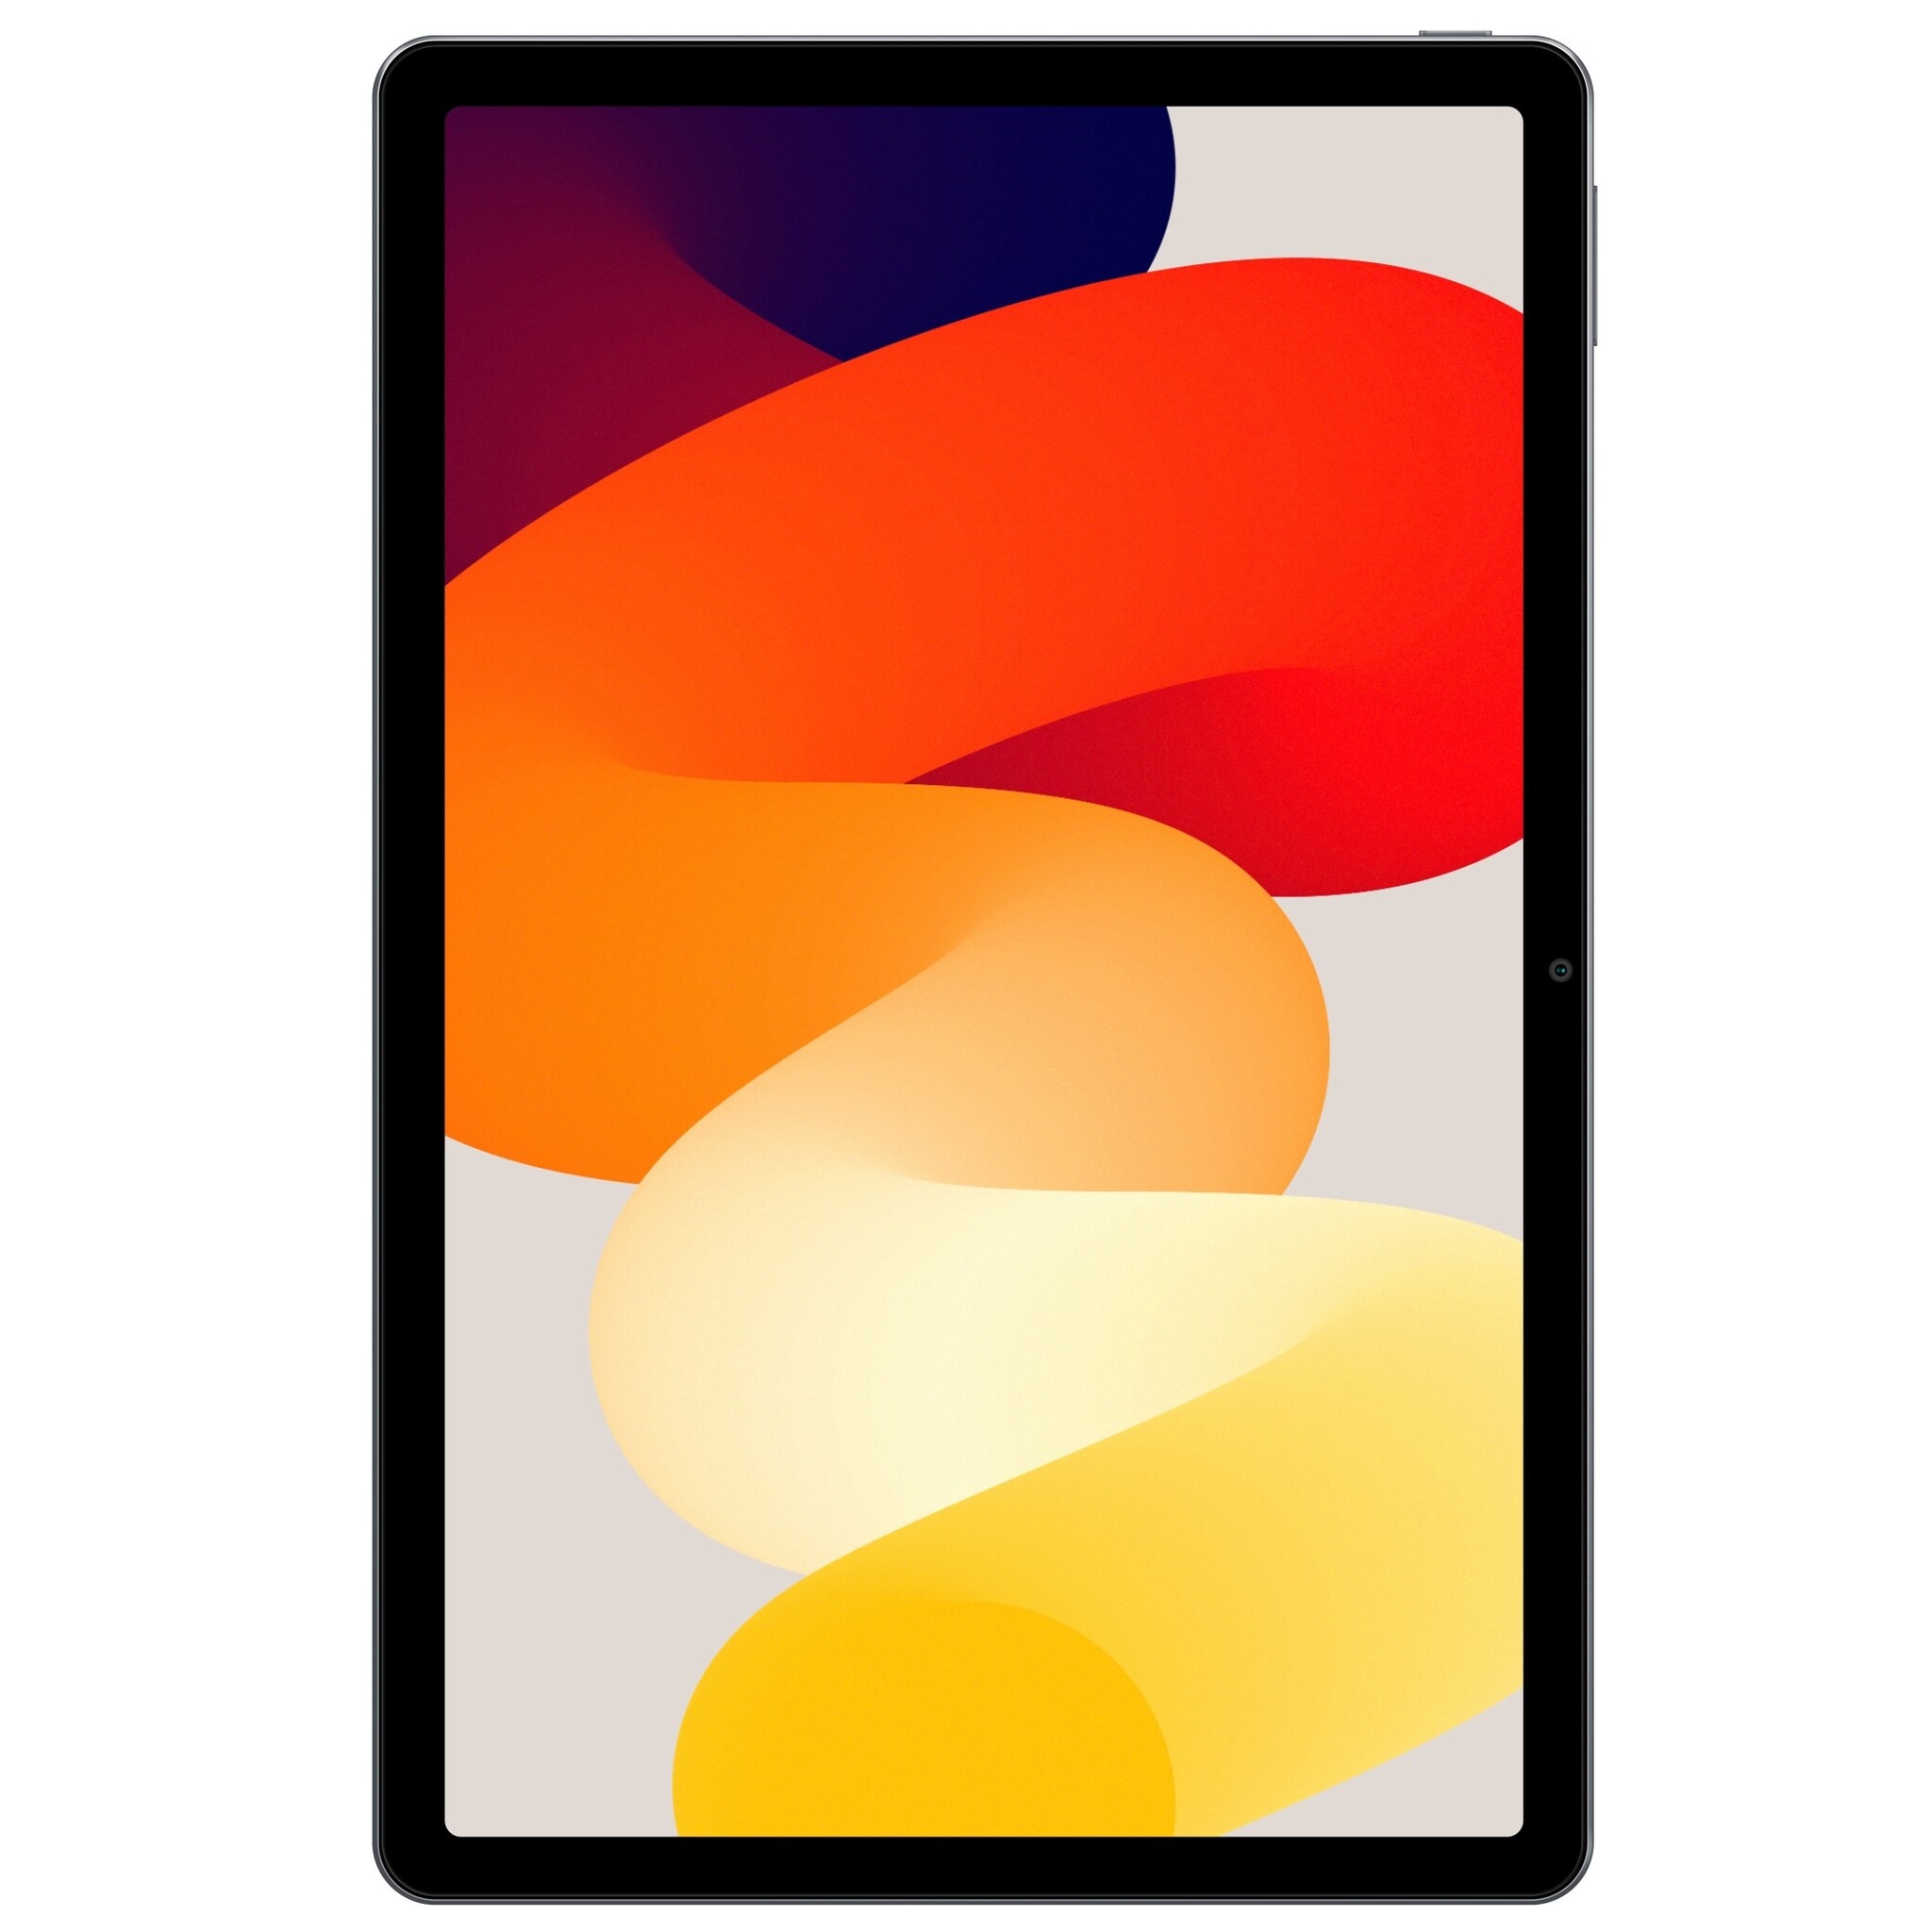 Tablet Xiaomi Redmi Pad SE 256GB 8GB RAM Negro - Next Cell